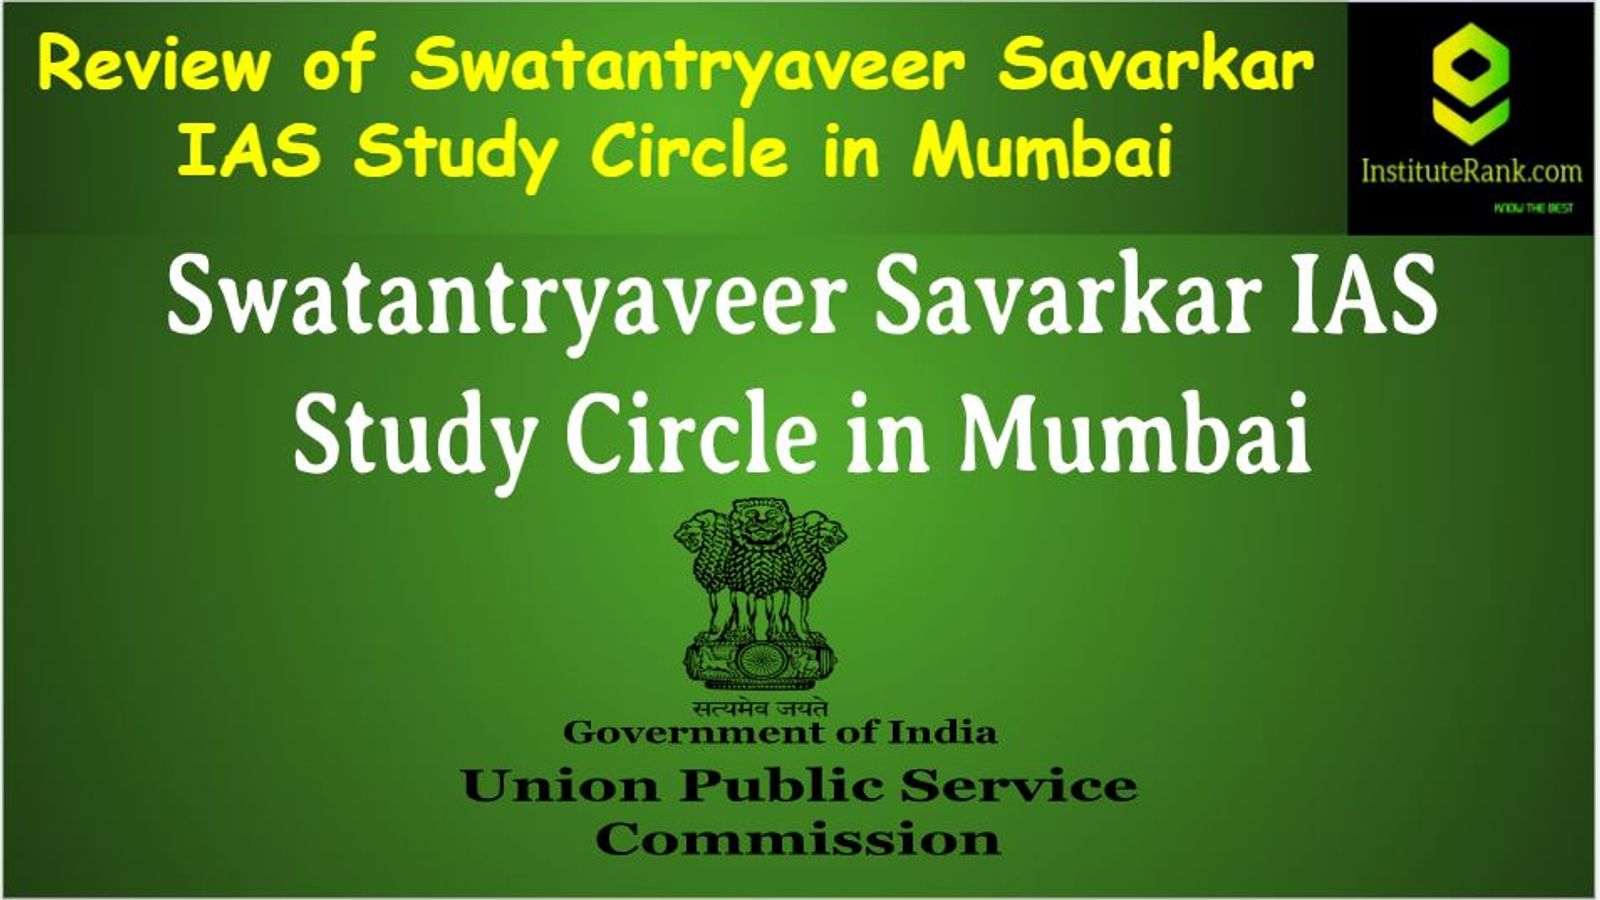 Swatantryaveer Savarkar IAS Study Circle in Mumbai Review